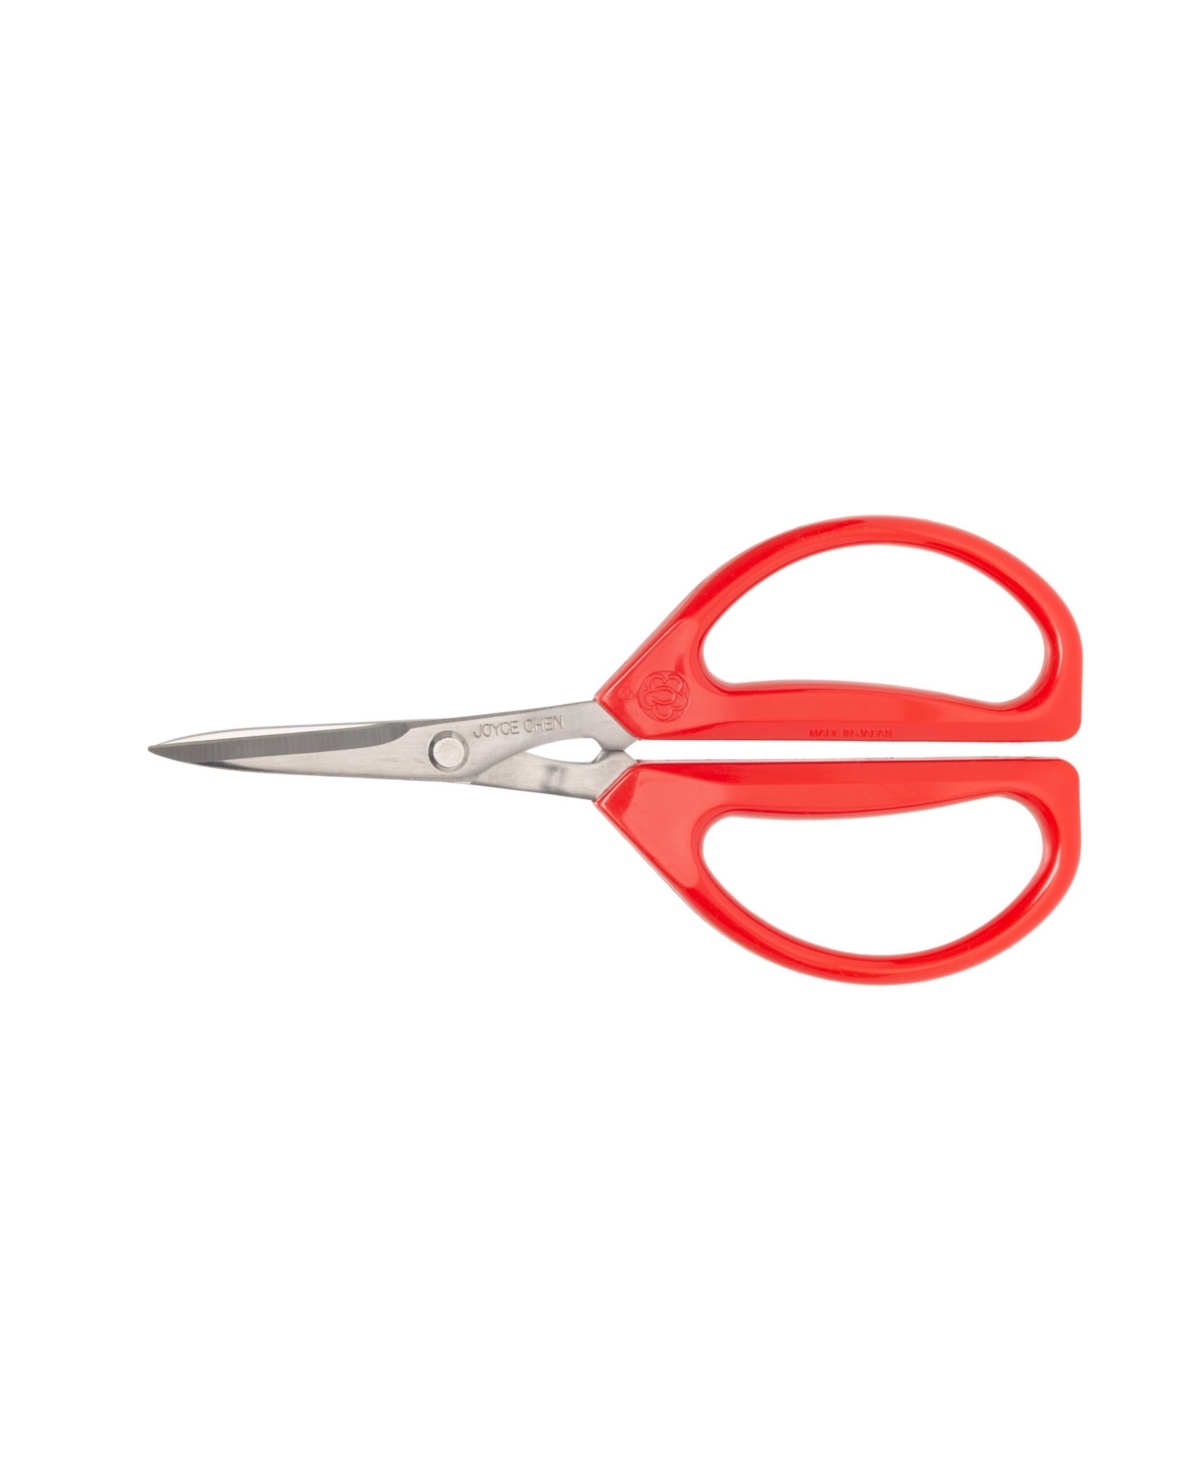 Joyce Chen Original Unlimited Kitchen Scissors With Handles In Red